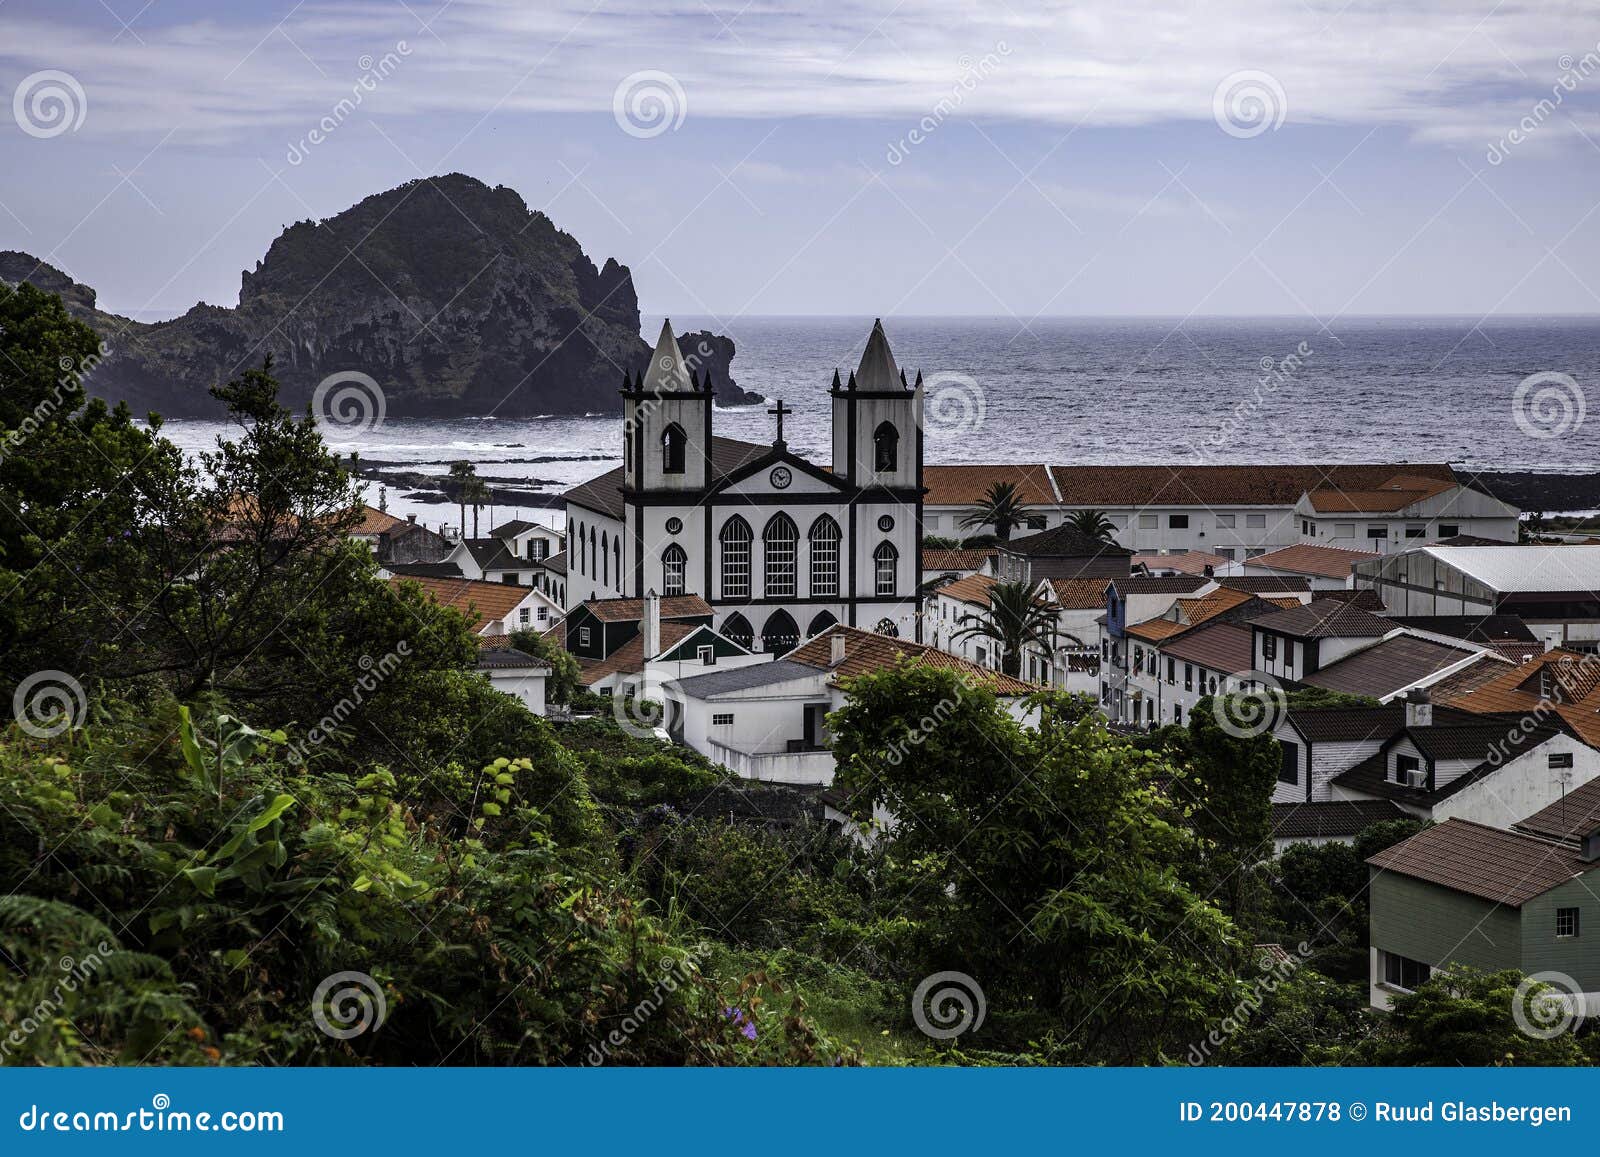 beautiful historic church in lajes do pico, azores island. igreja matriz de sÃÂ£o roque.